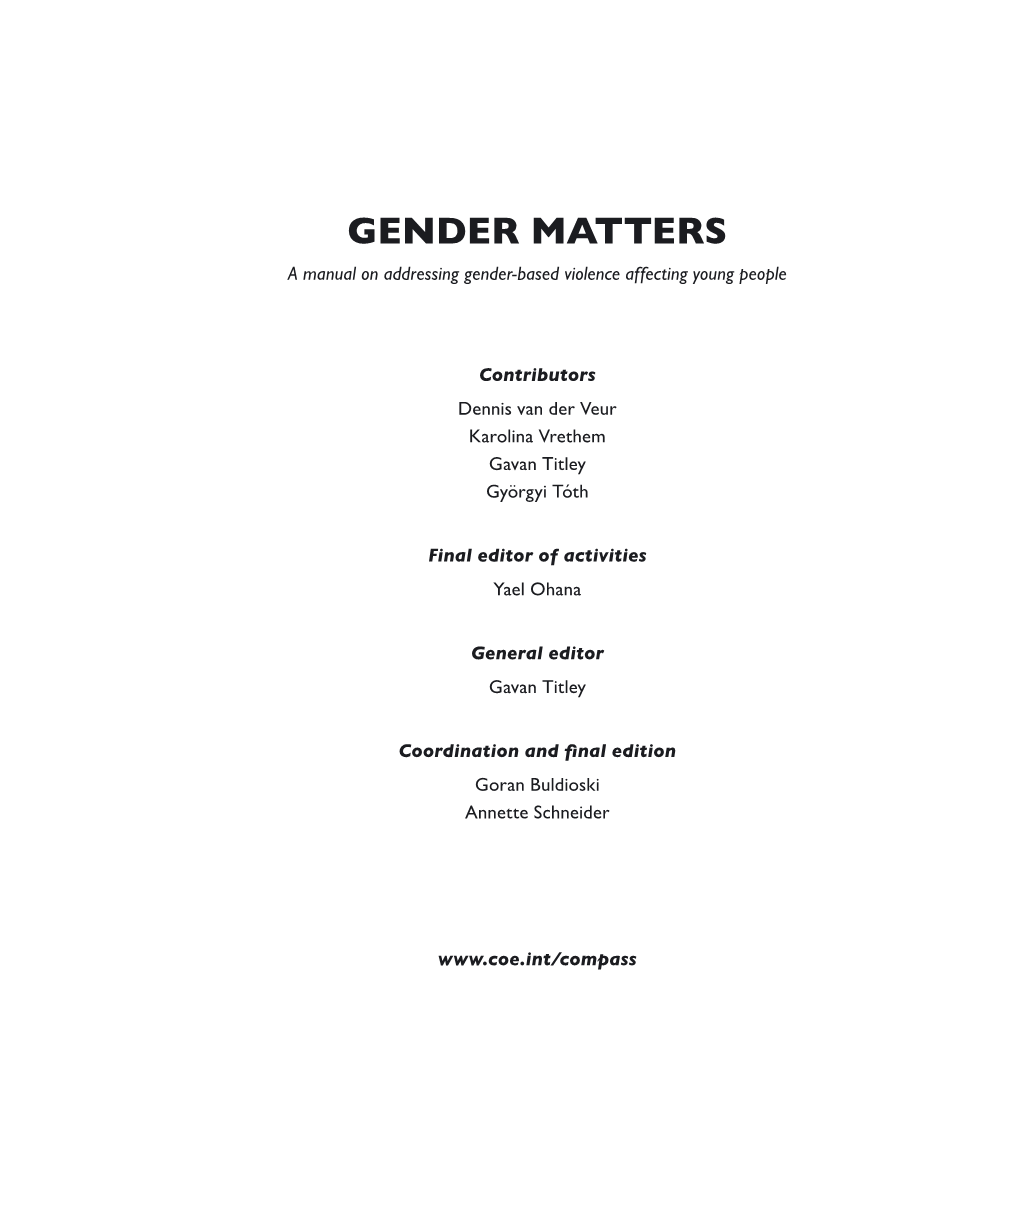 GENDER MATTERS a Manual on Addressing Gender-Based Violence Affecting Young People